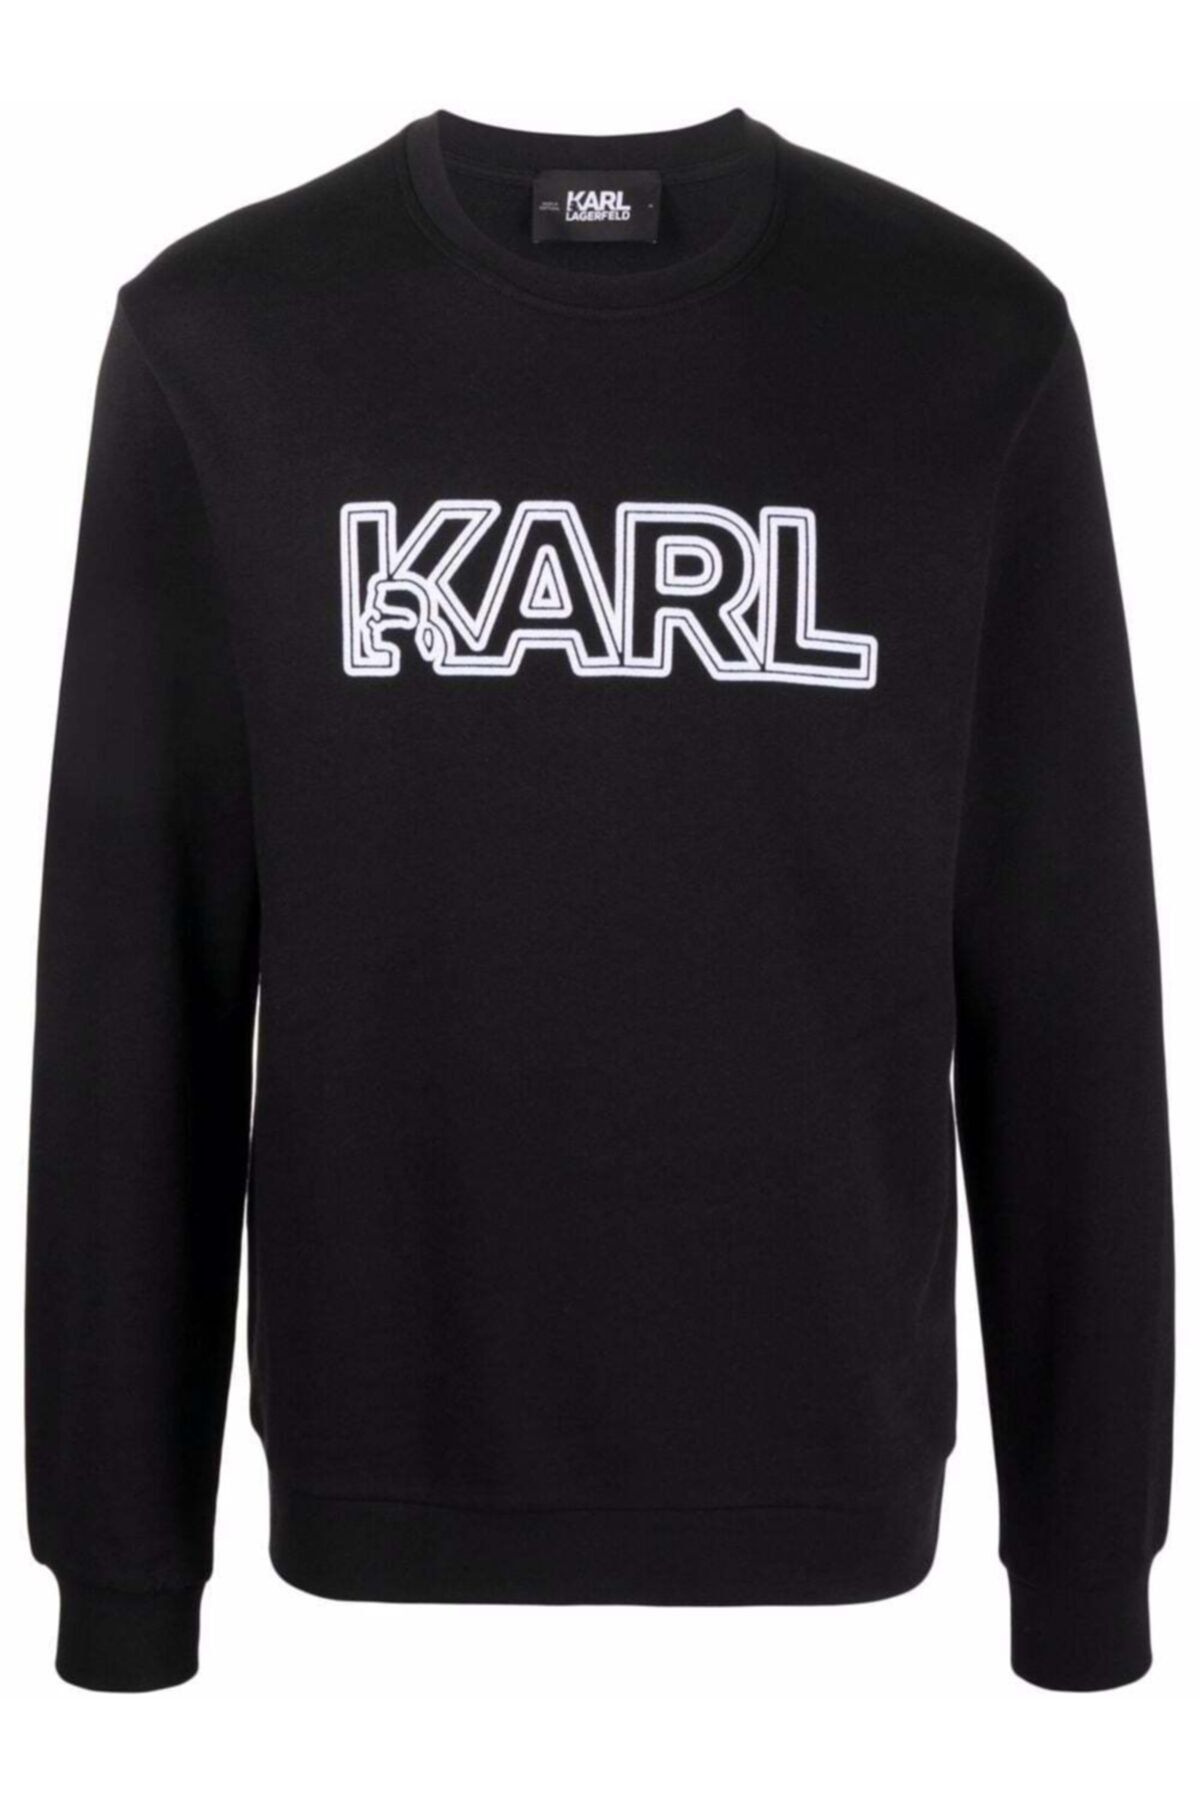 Karl Lagerfeld Baskı Siyah Sweatshirt